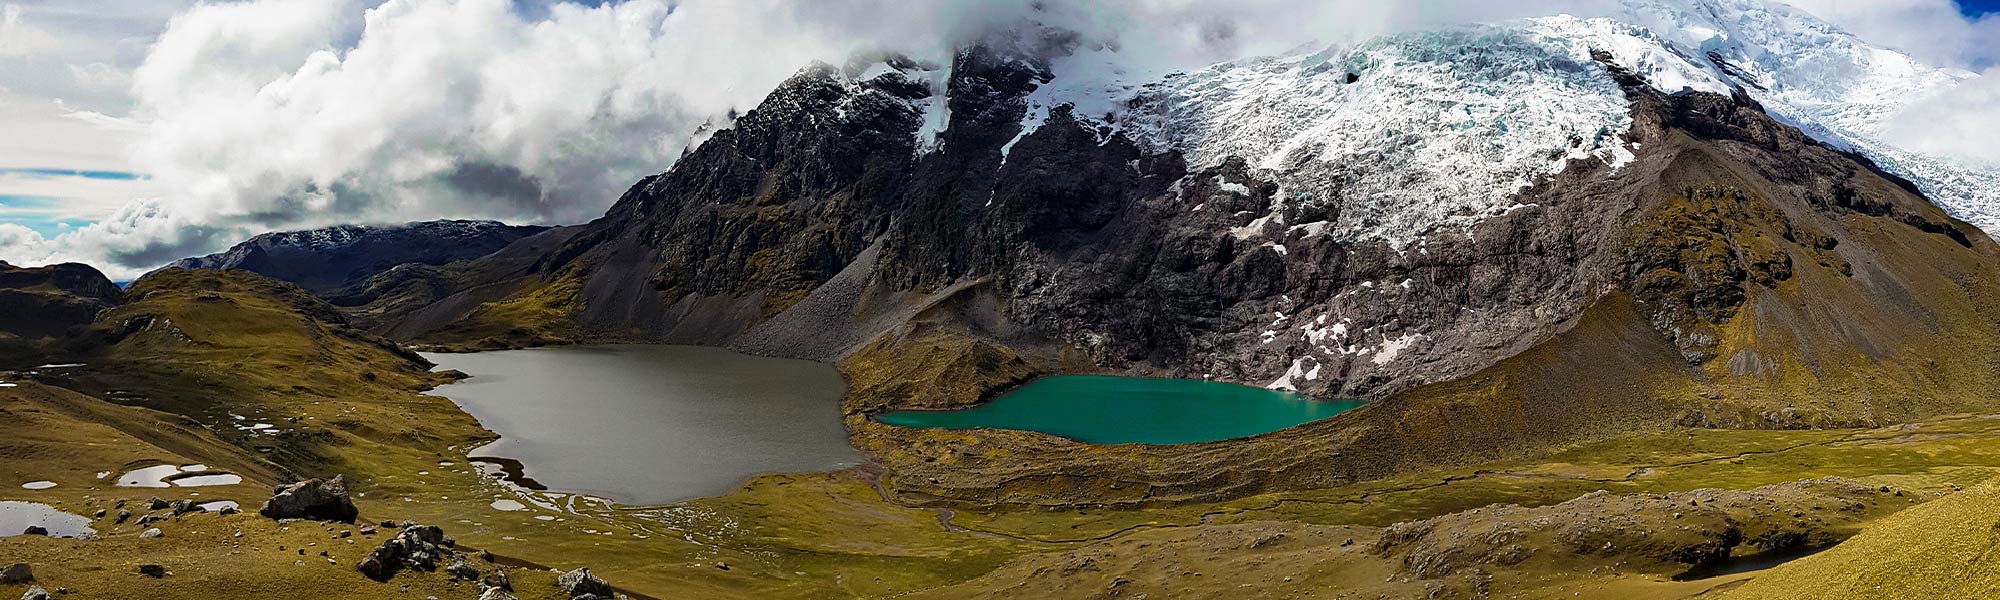 7 Lakes trek - Ausangate Peru 1 Day Hike